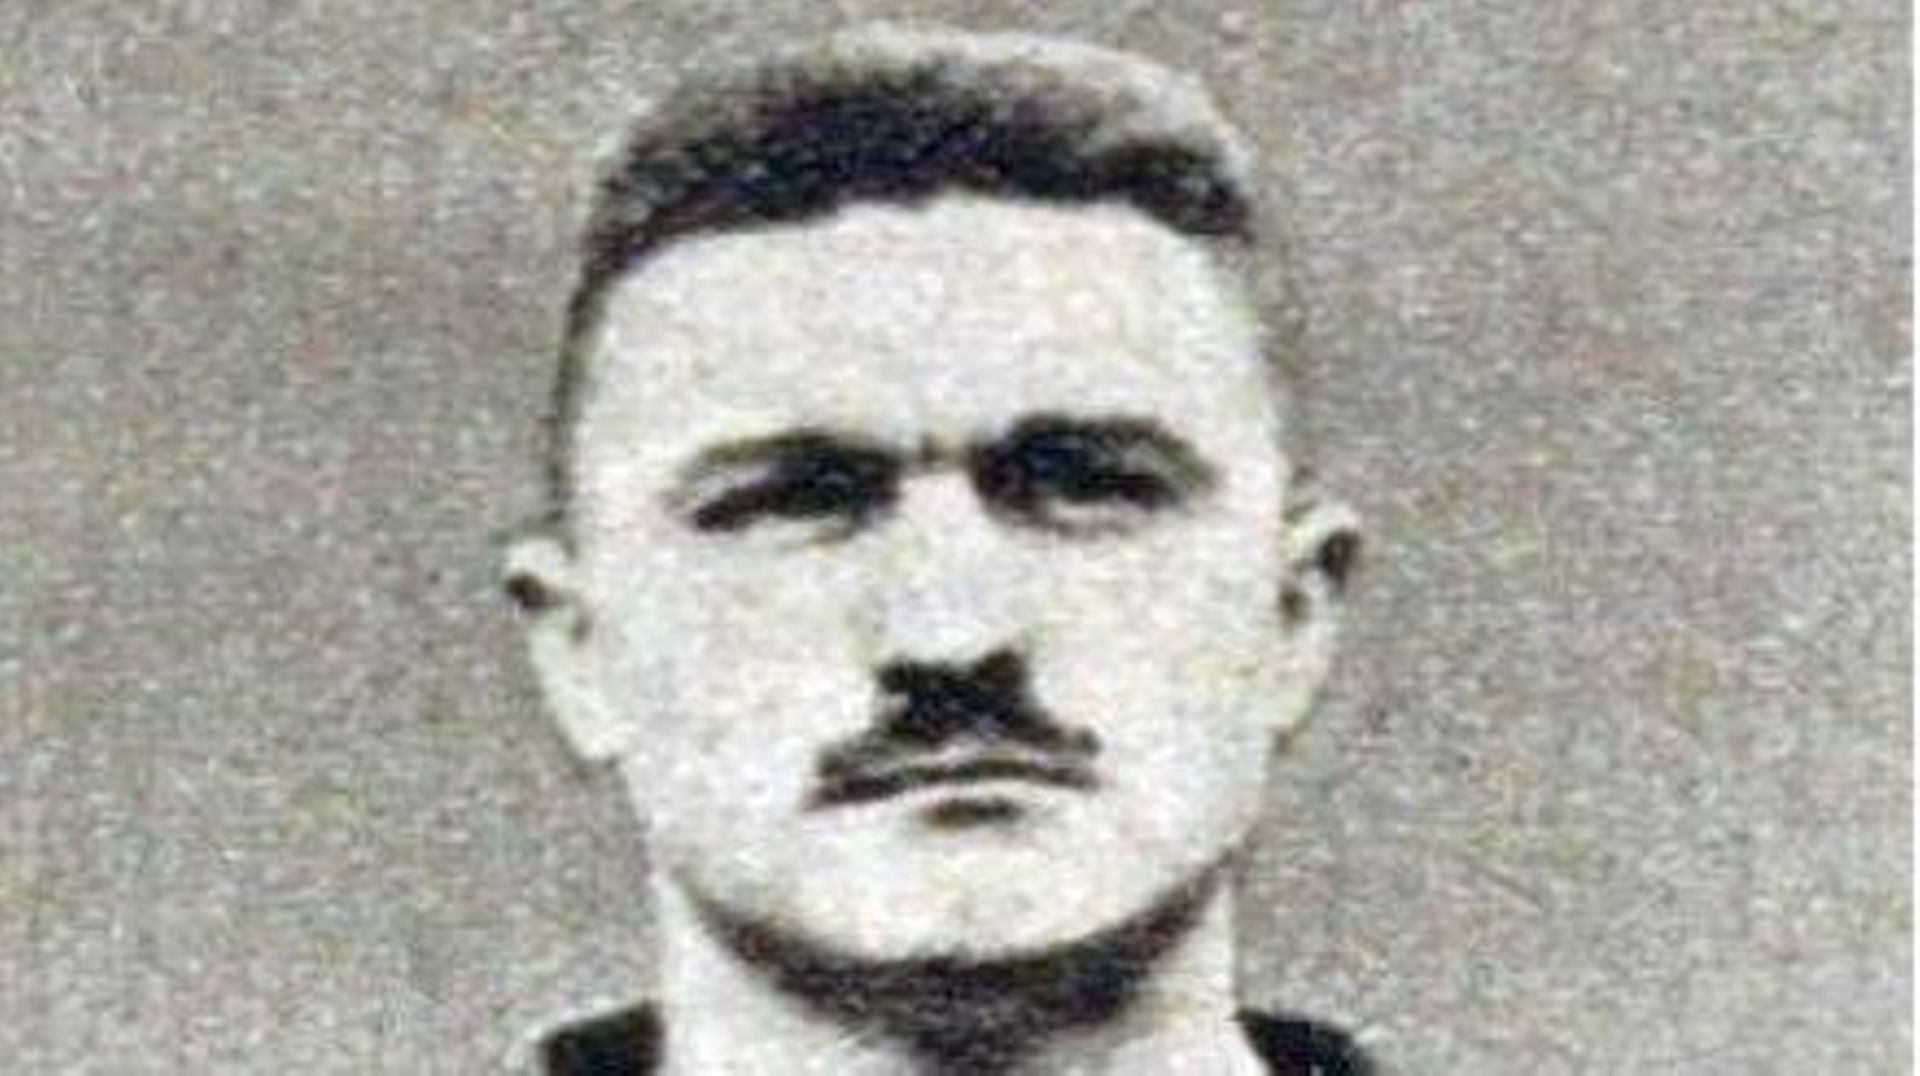 Armand Swartenbroeks en 1923